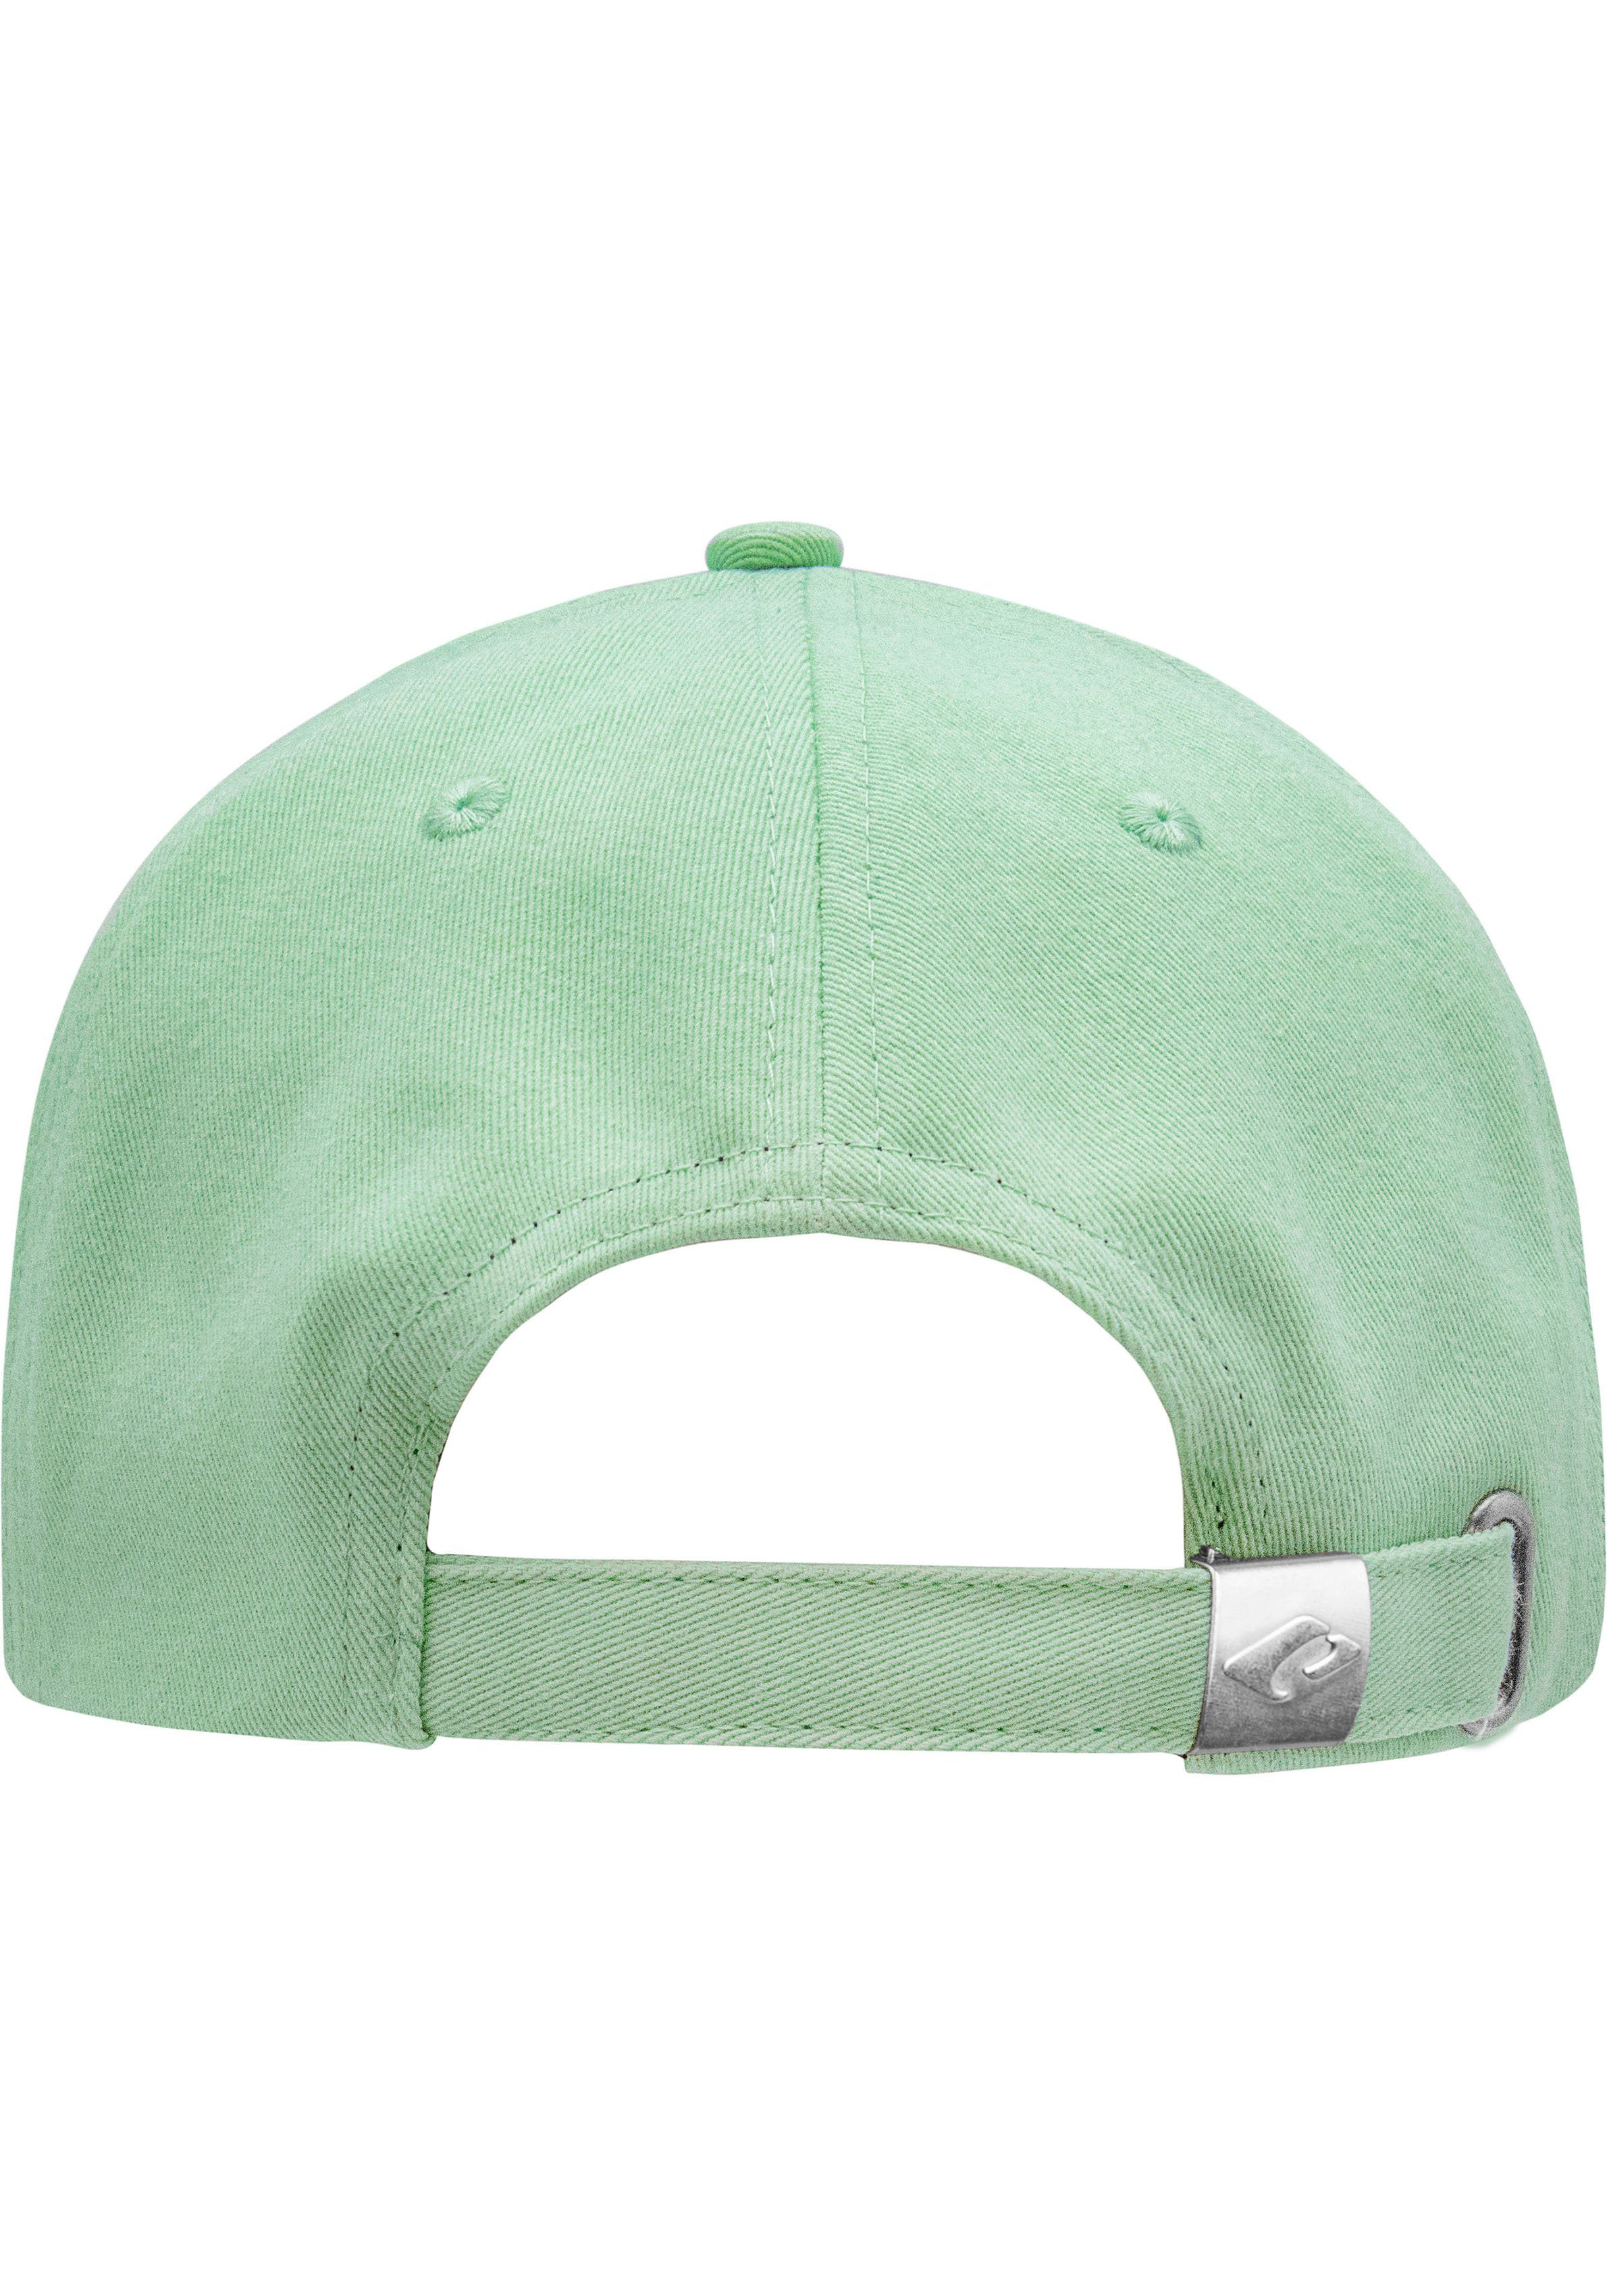 chillouts Baseball Arklow Cap Hat mint